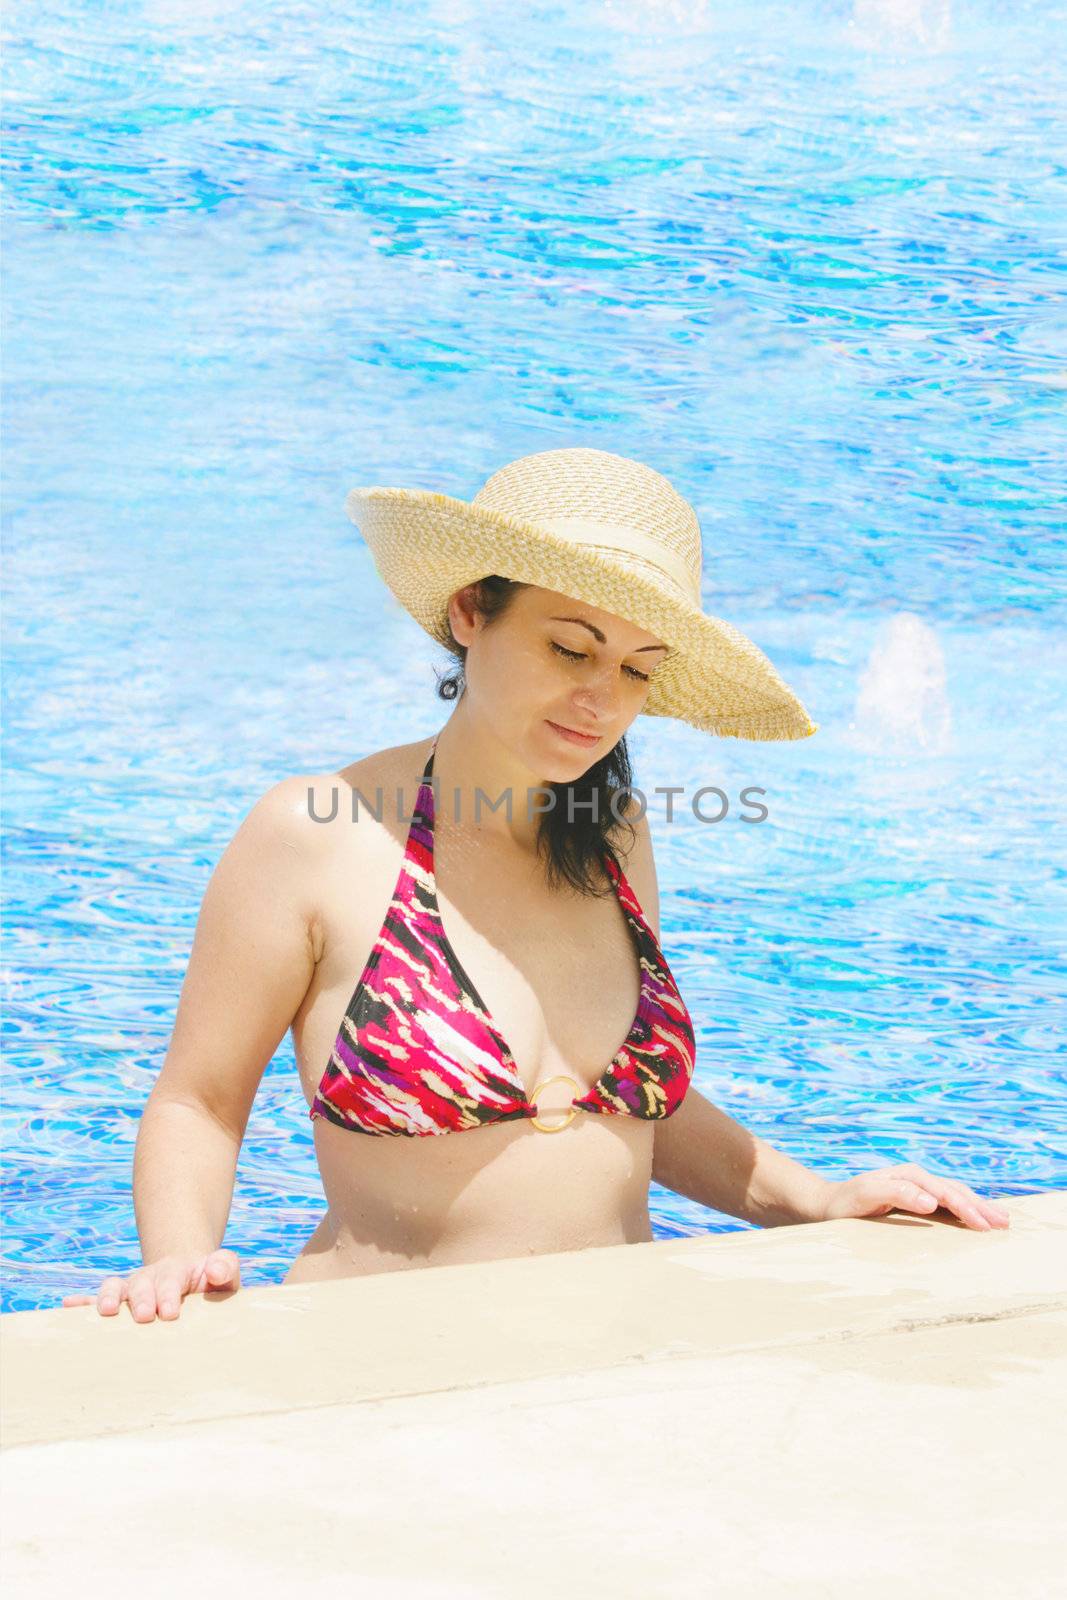 The beautiful woman in a hat in pool by dacasdo